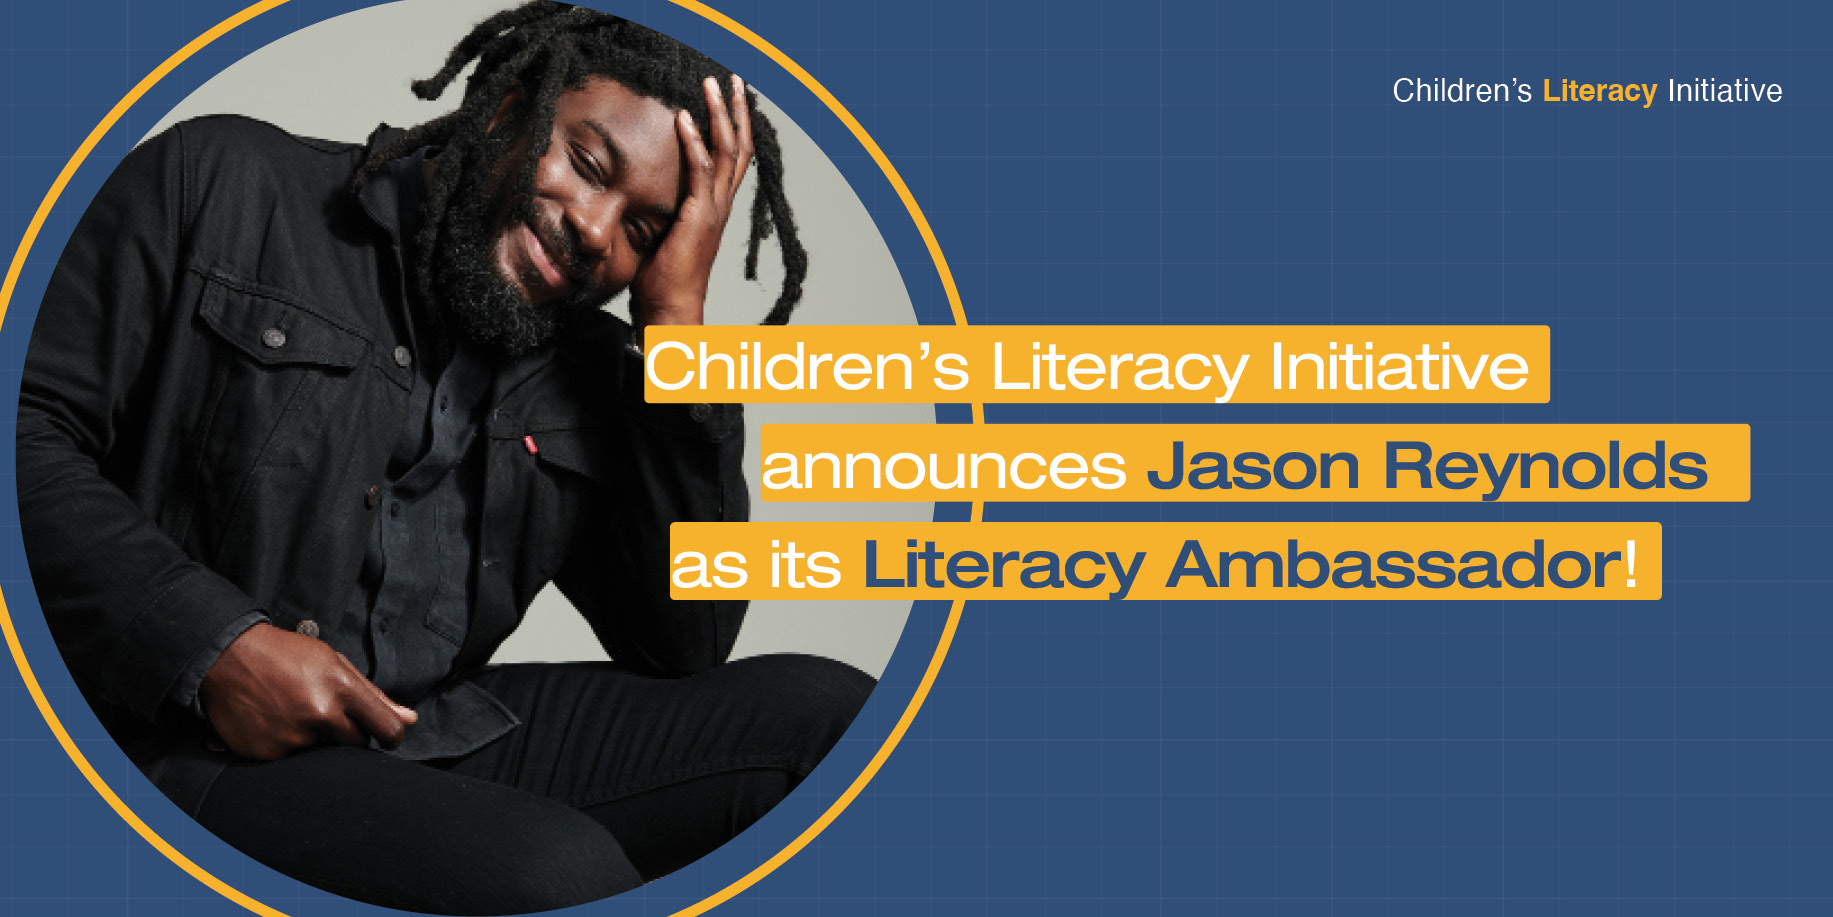 Jason Reynolds, Children's Literacy Initiative Literacy Ambassador for C